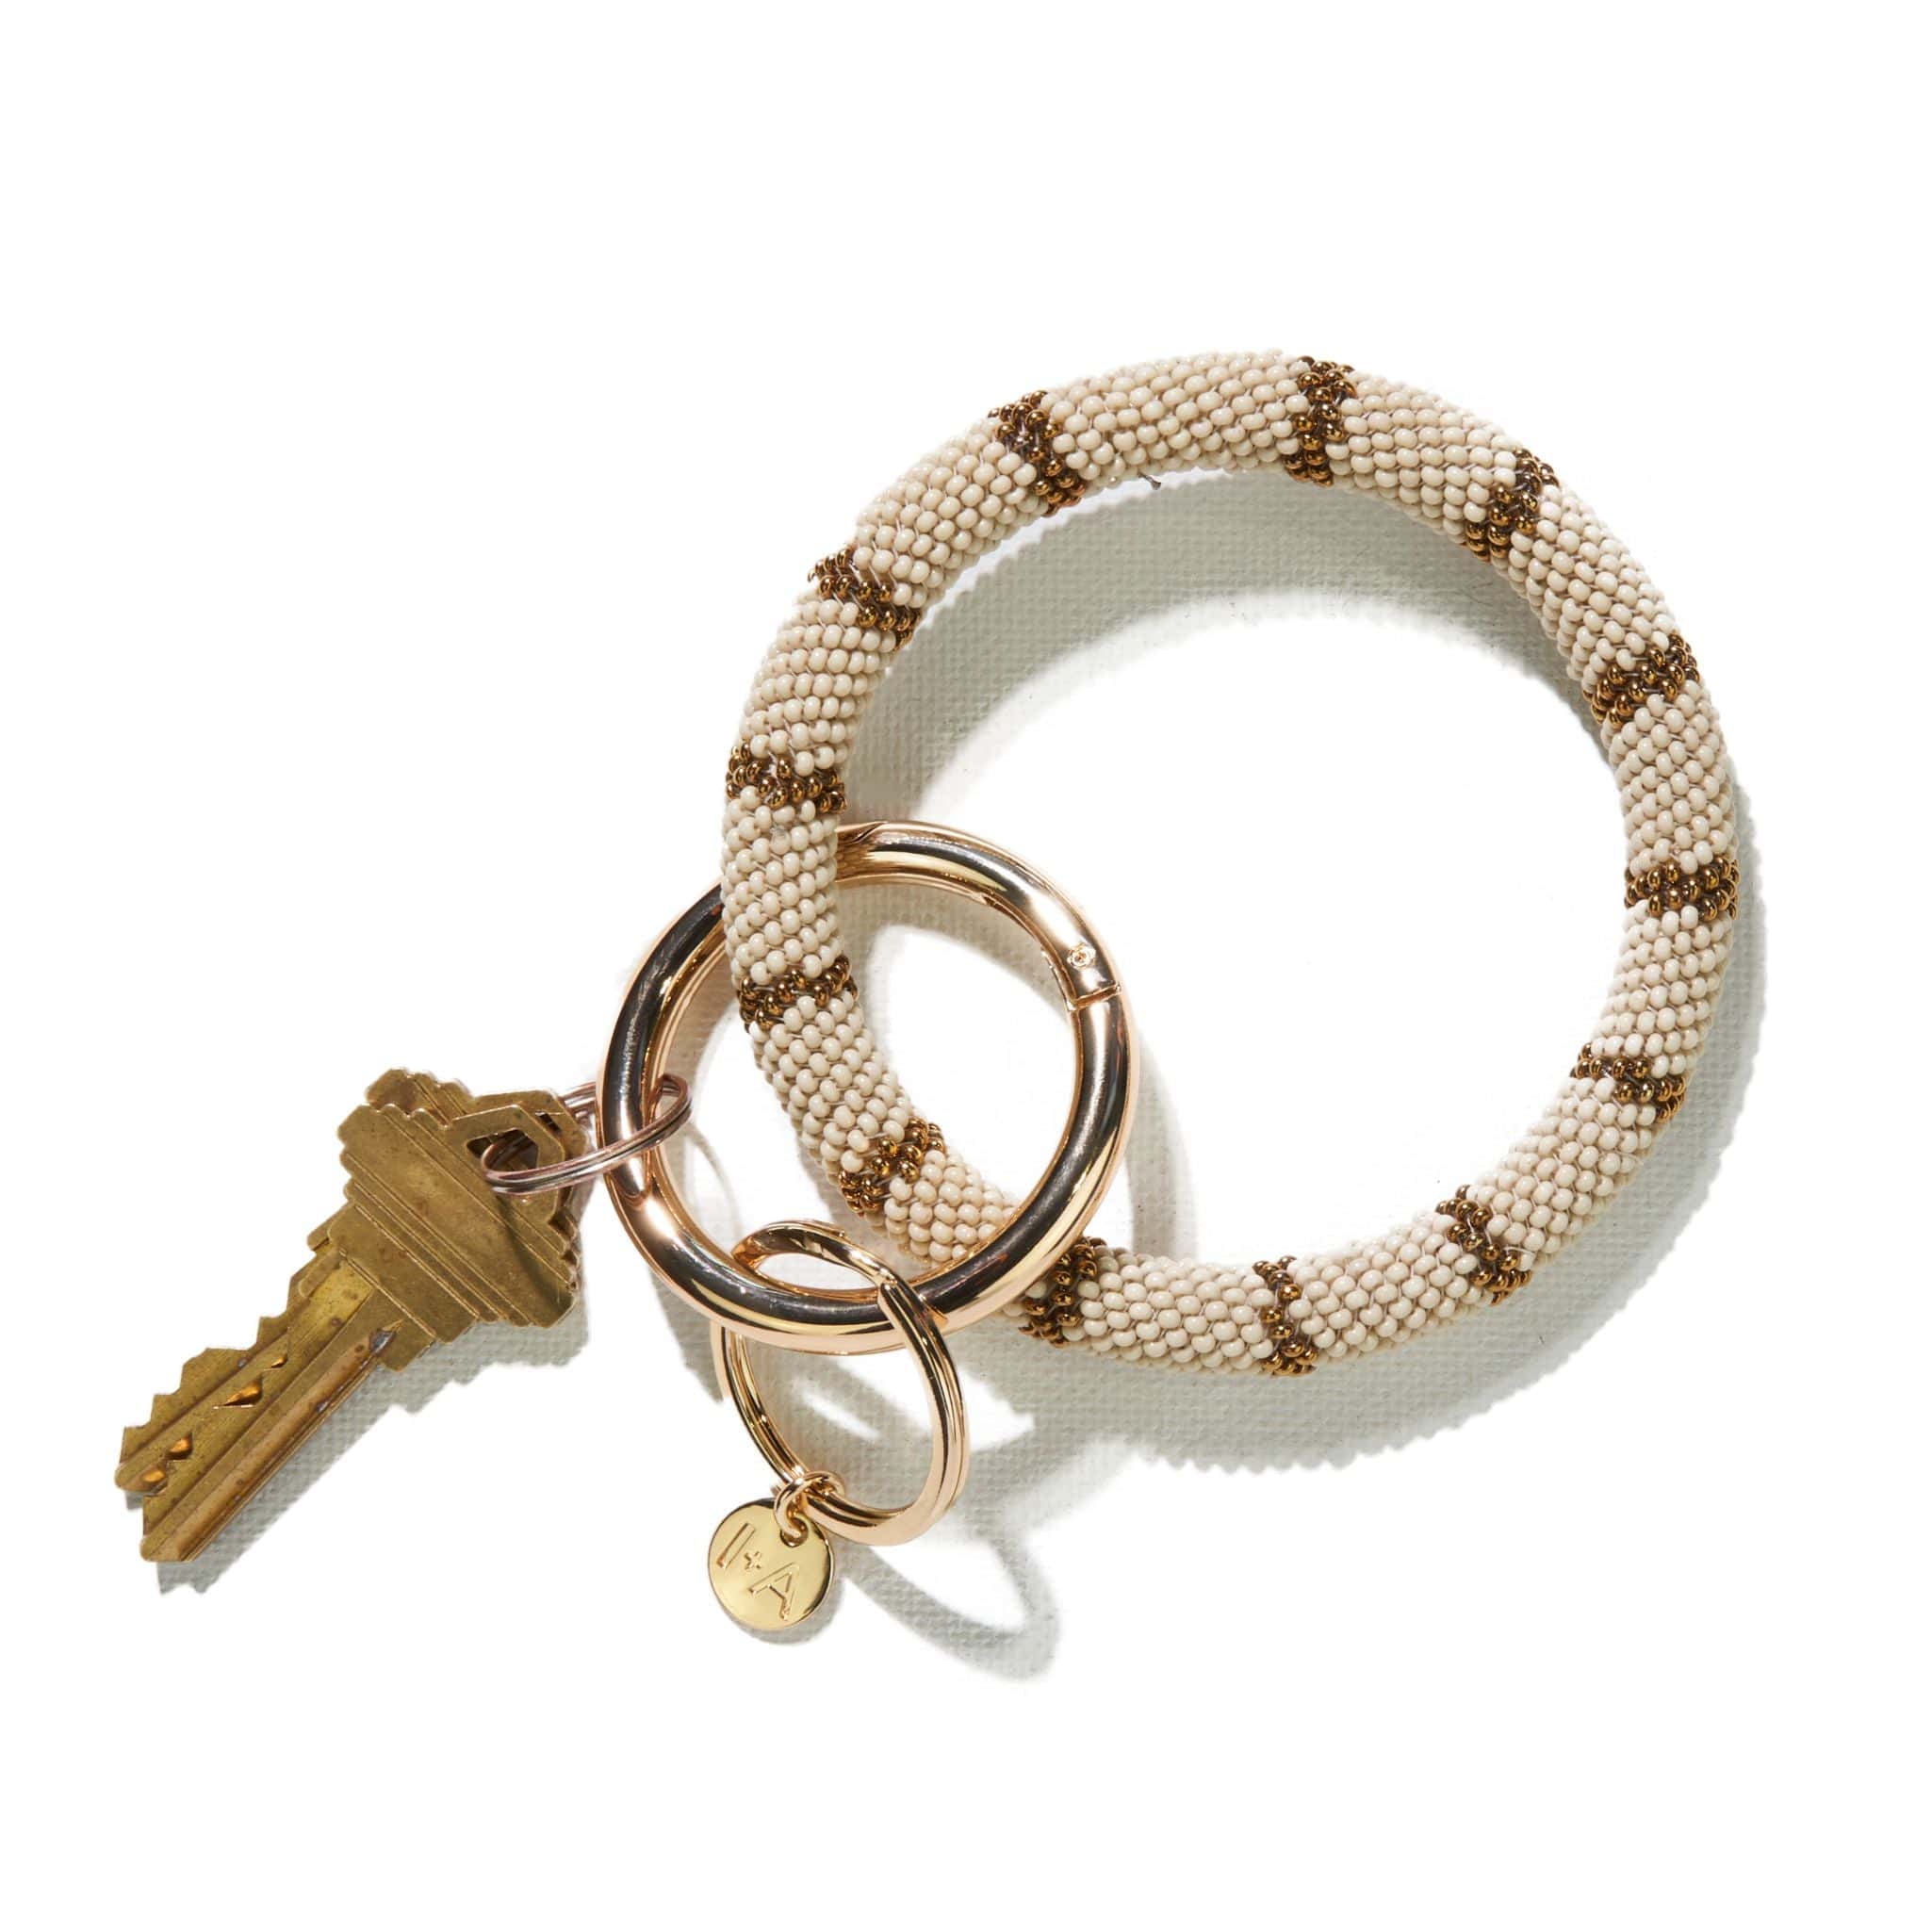 KeyWalletsNthings Keychain Bracelet, Keyring Silicone, Key Chain Wristlet, Key Holder, Silicone Wrist Strap, Gifts for Christmas, Key Ring Bangle